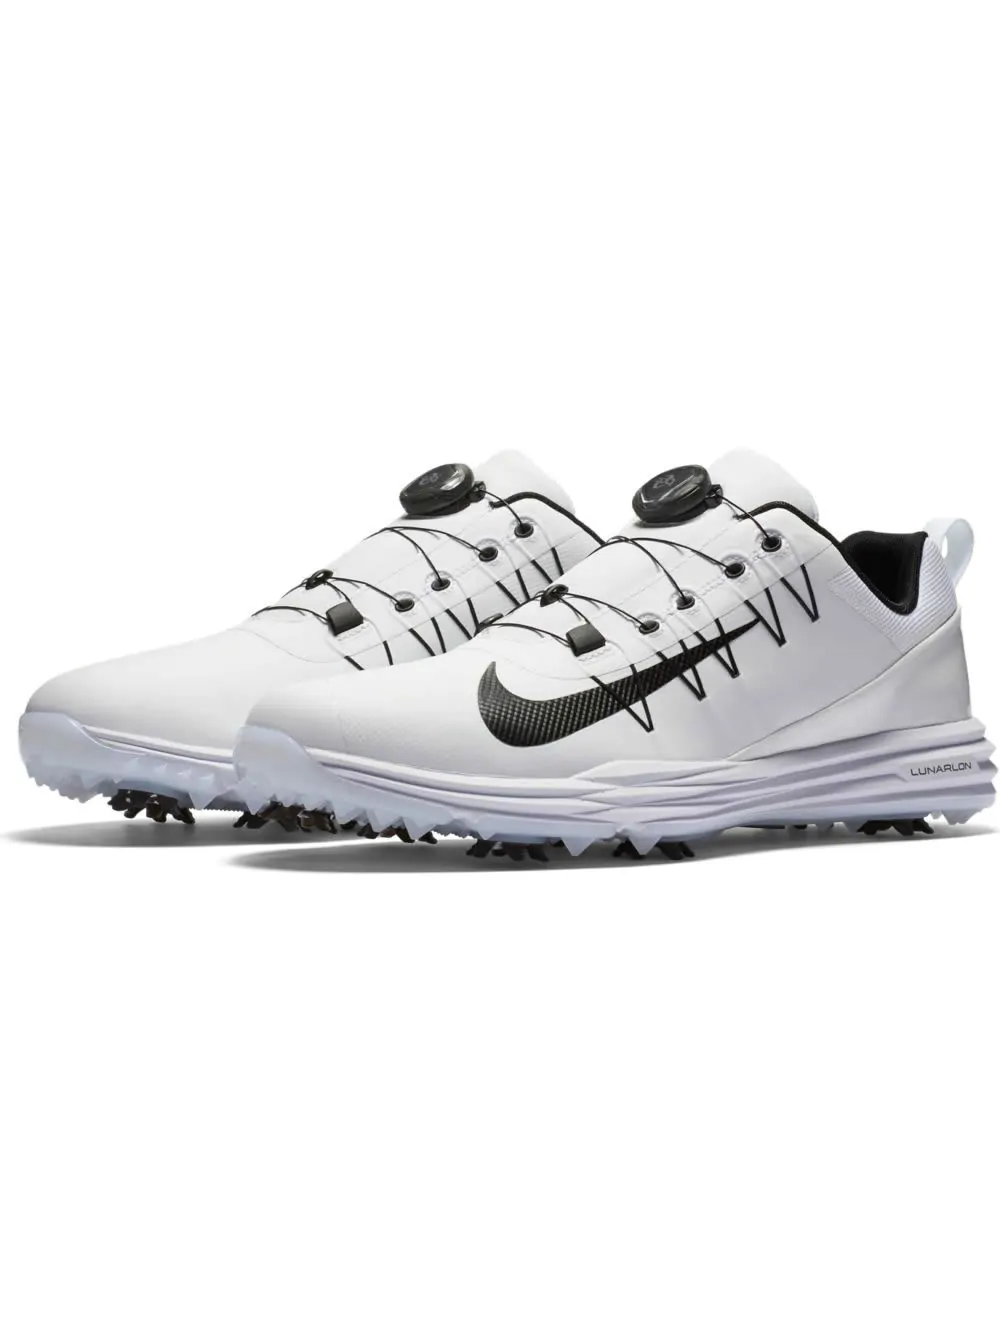 Miguel Ángel Medicina Forense cama Nike Lunar Command 2 BOA Golf Shoes - White/Black-White